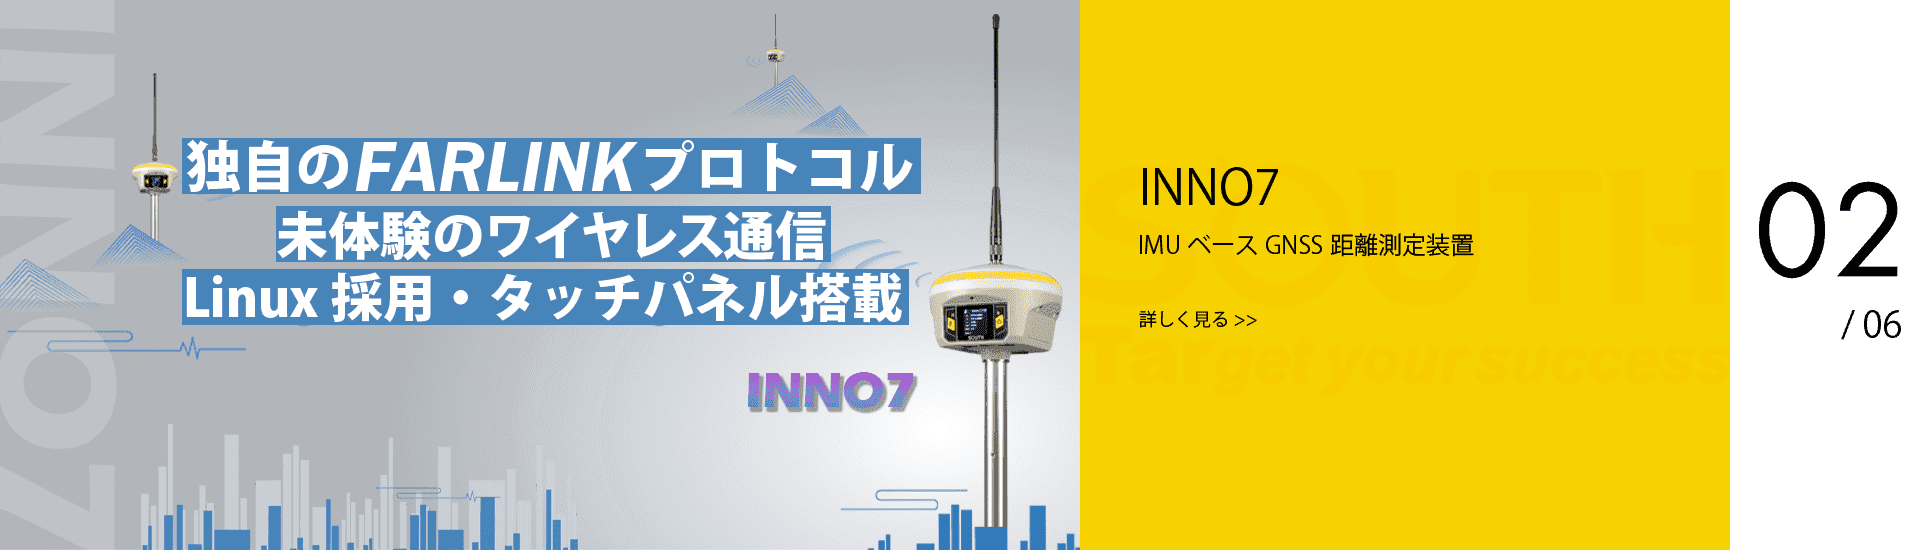 IMUベース GNSS距離測定装置 INNO7